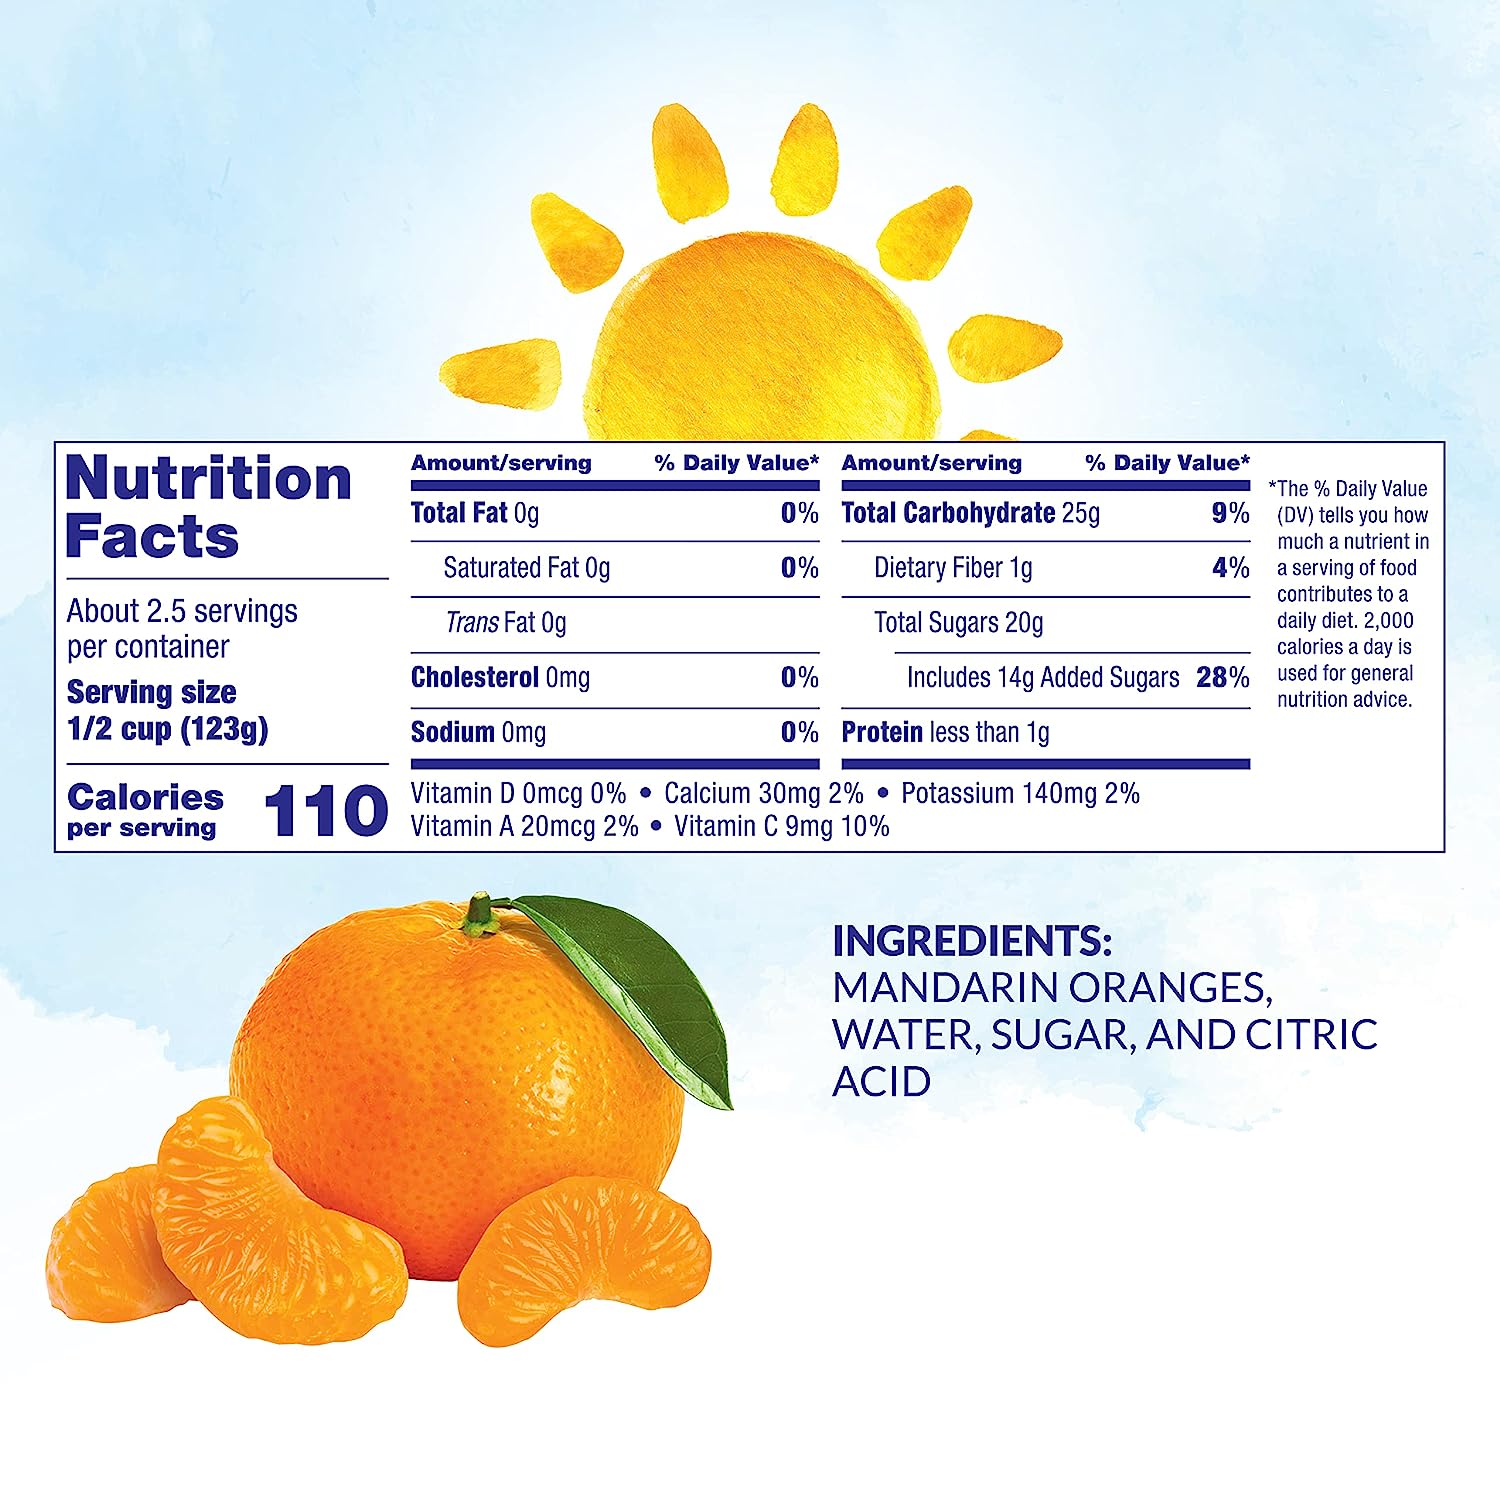 Great Value Mandarin Oranges in Gel, 4 x 123 g 